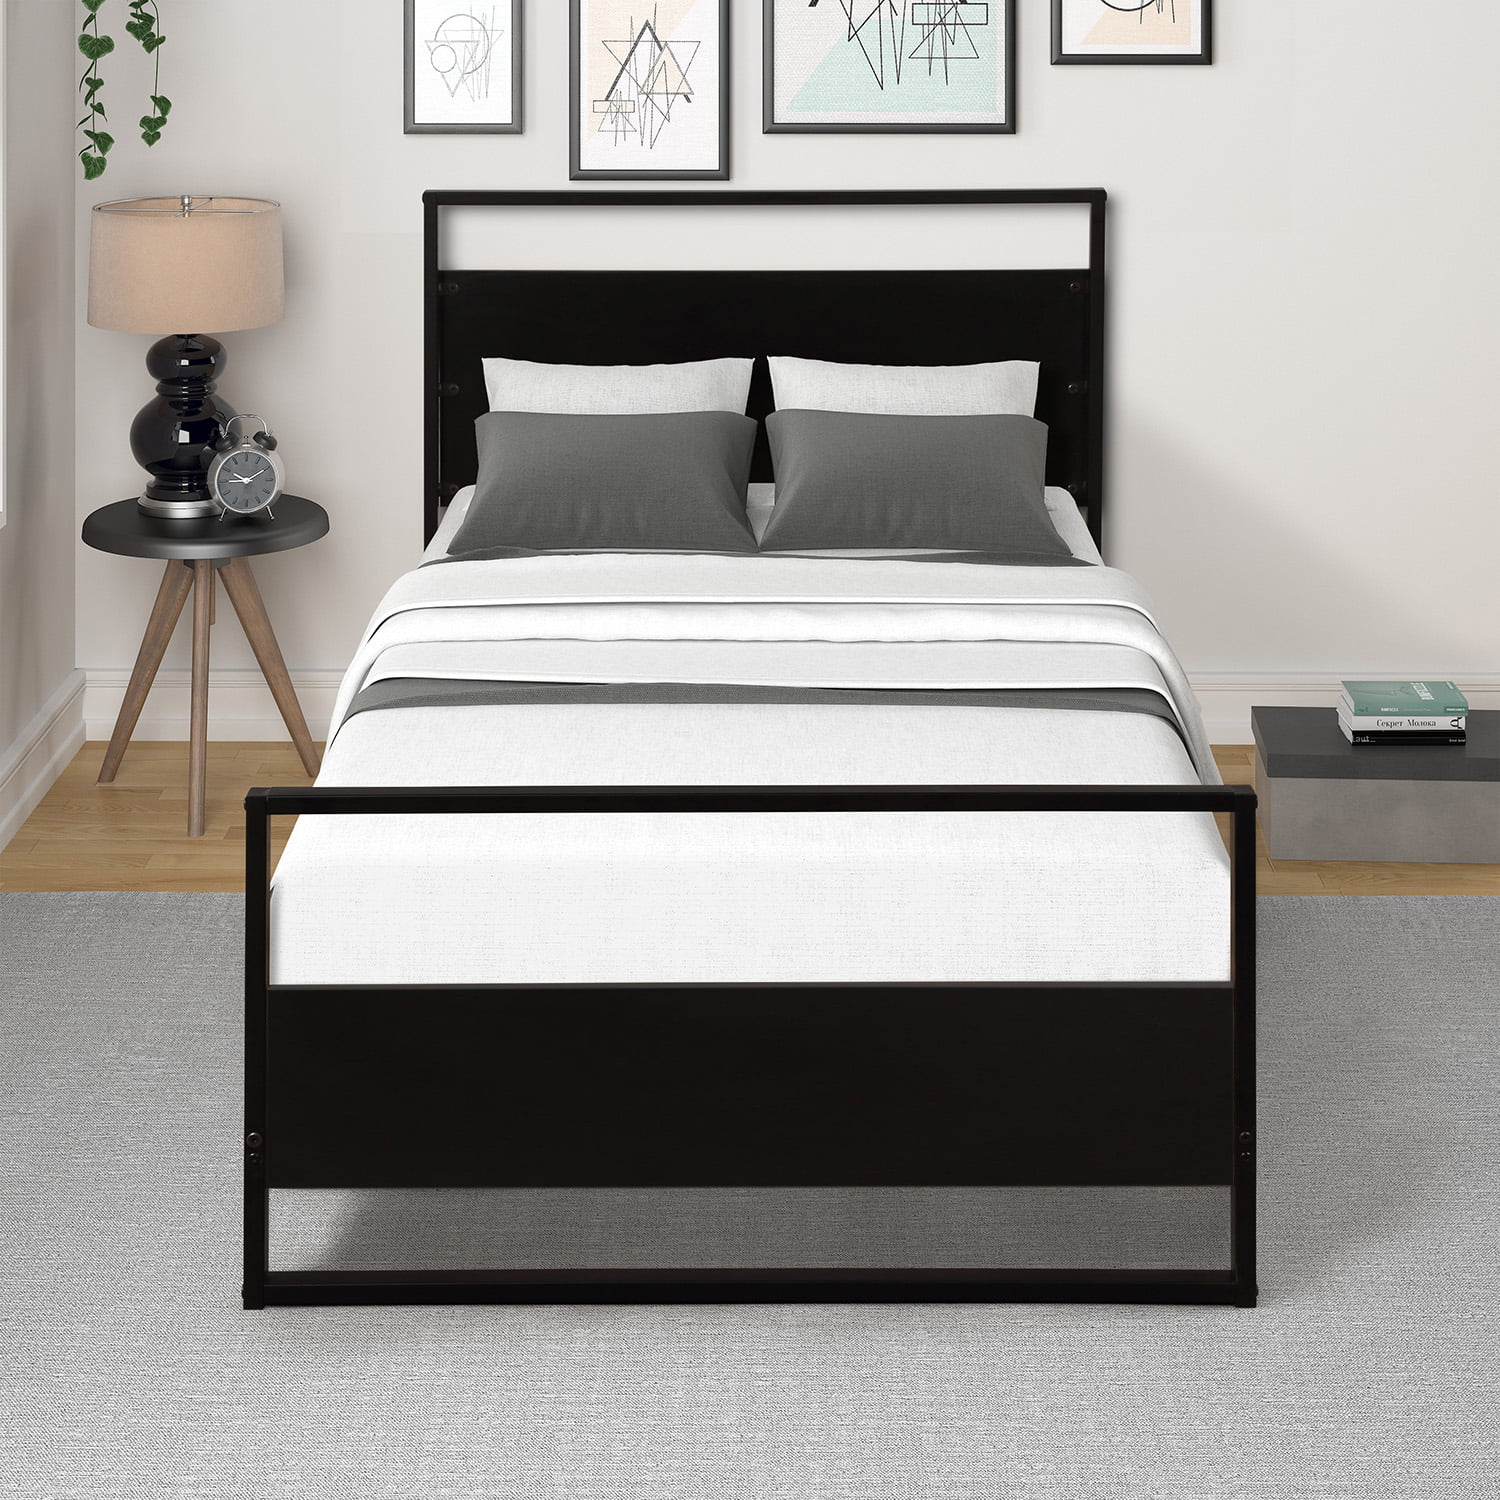 Twin Metal Bed Frame Black, Twin Bed Frame No Slats